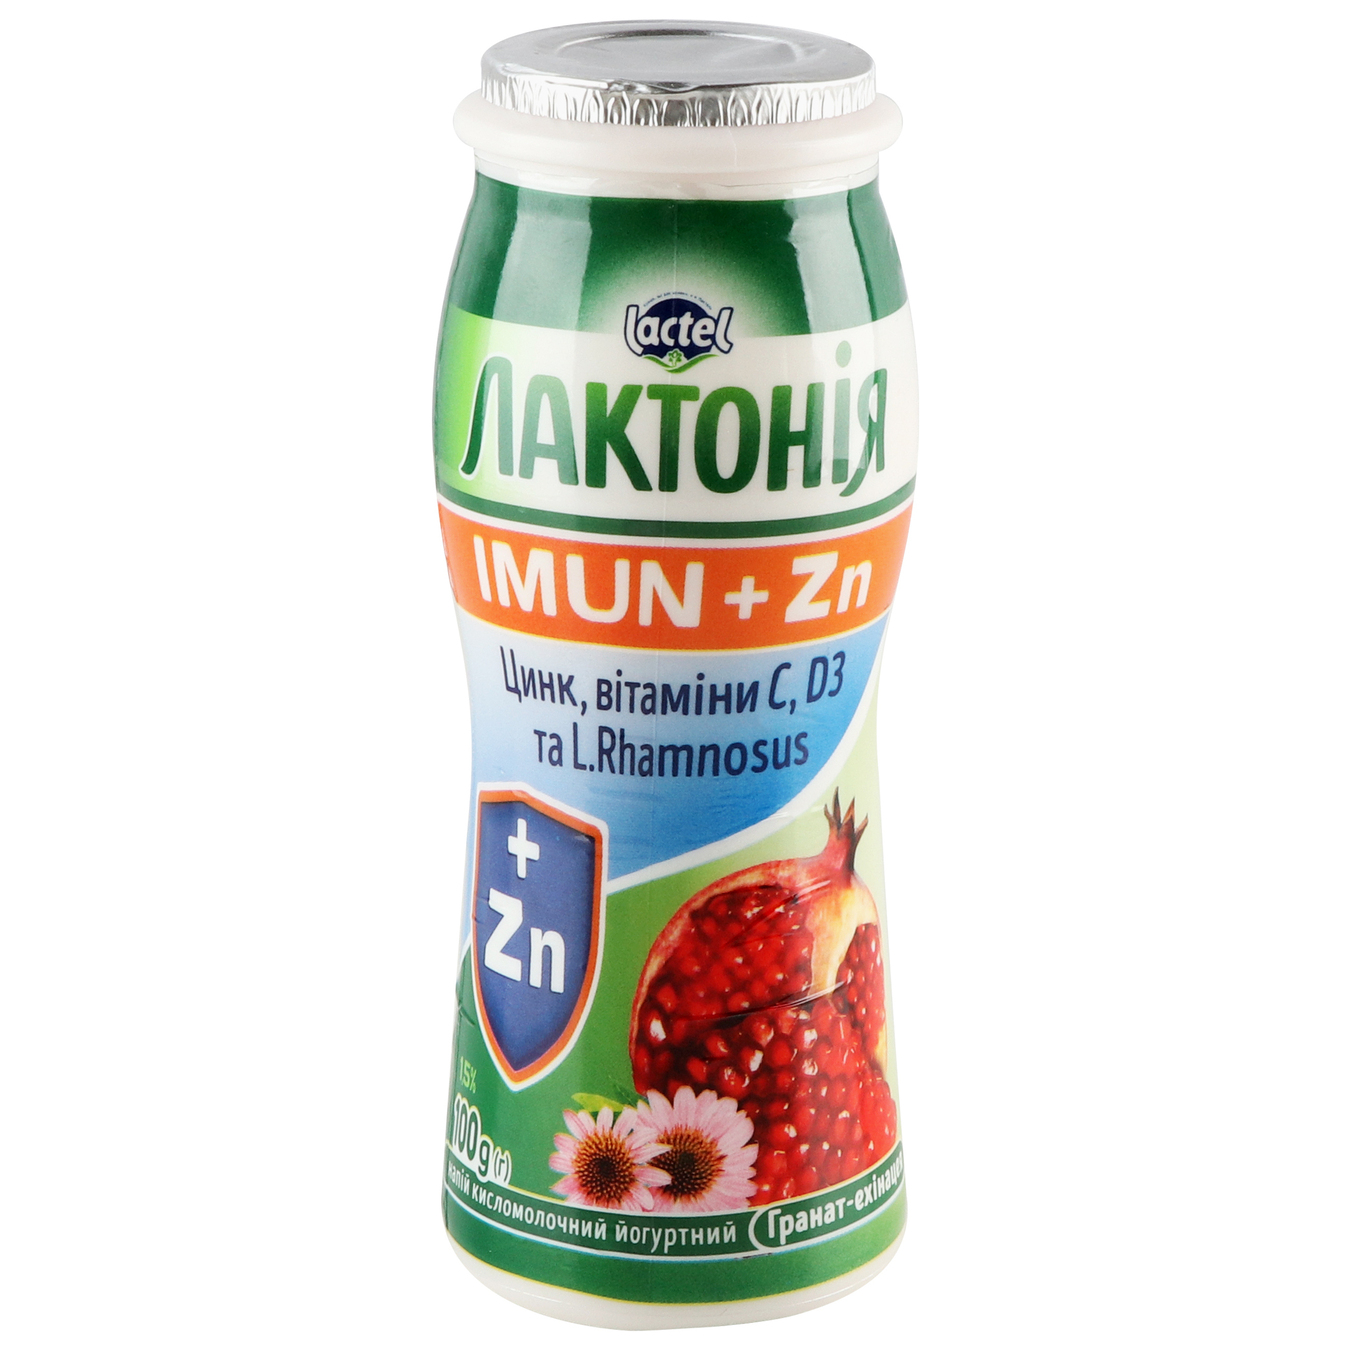 Drink Lactonia sour milk yogurt Imun + pomegranate-echinacea 1.5% 100g bottle 5